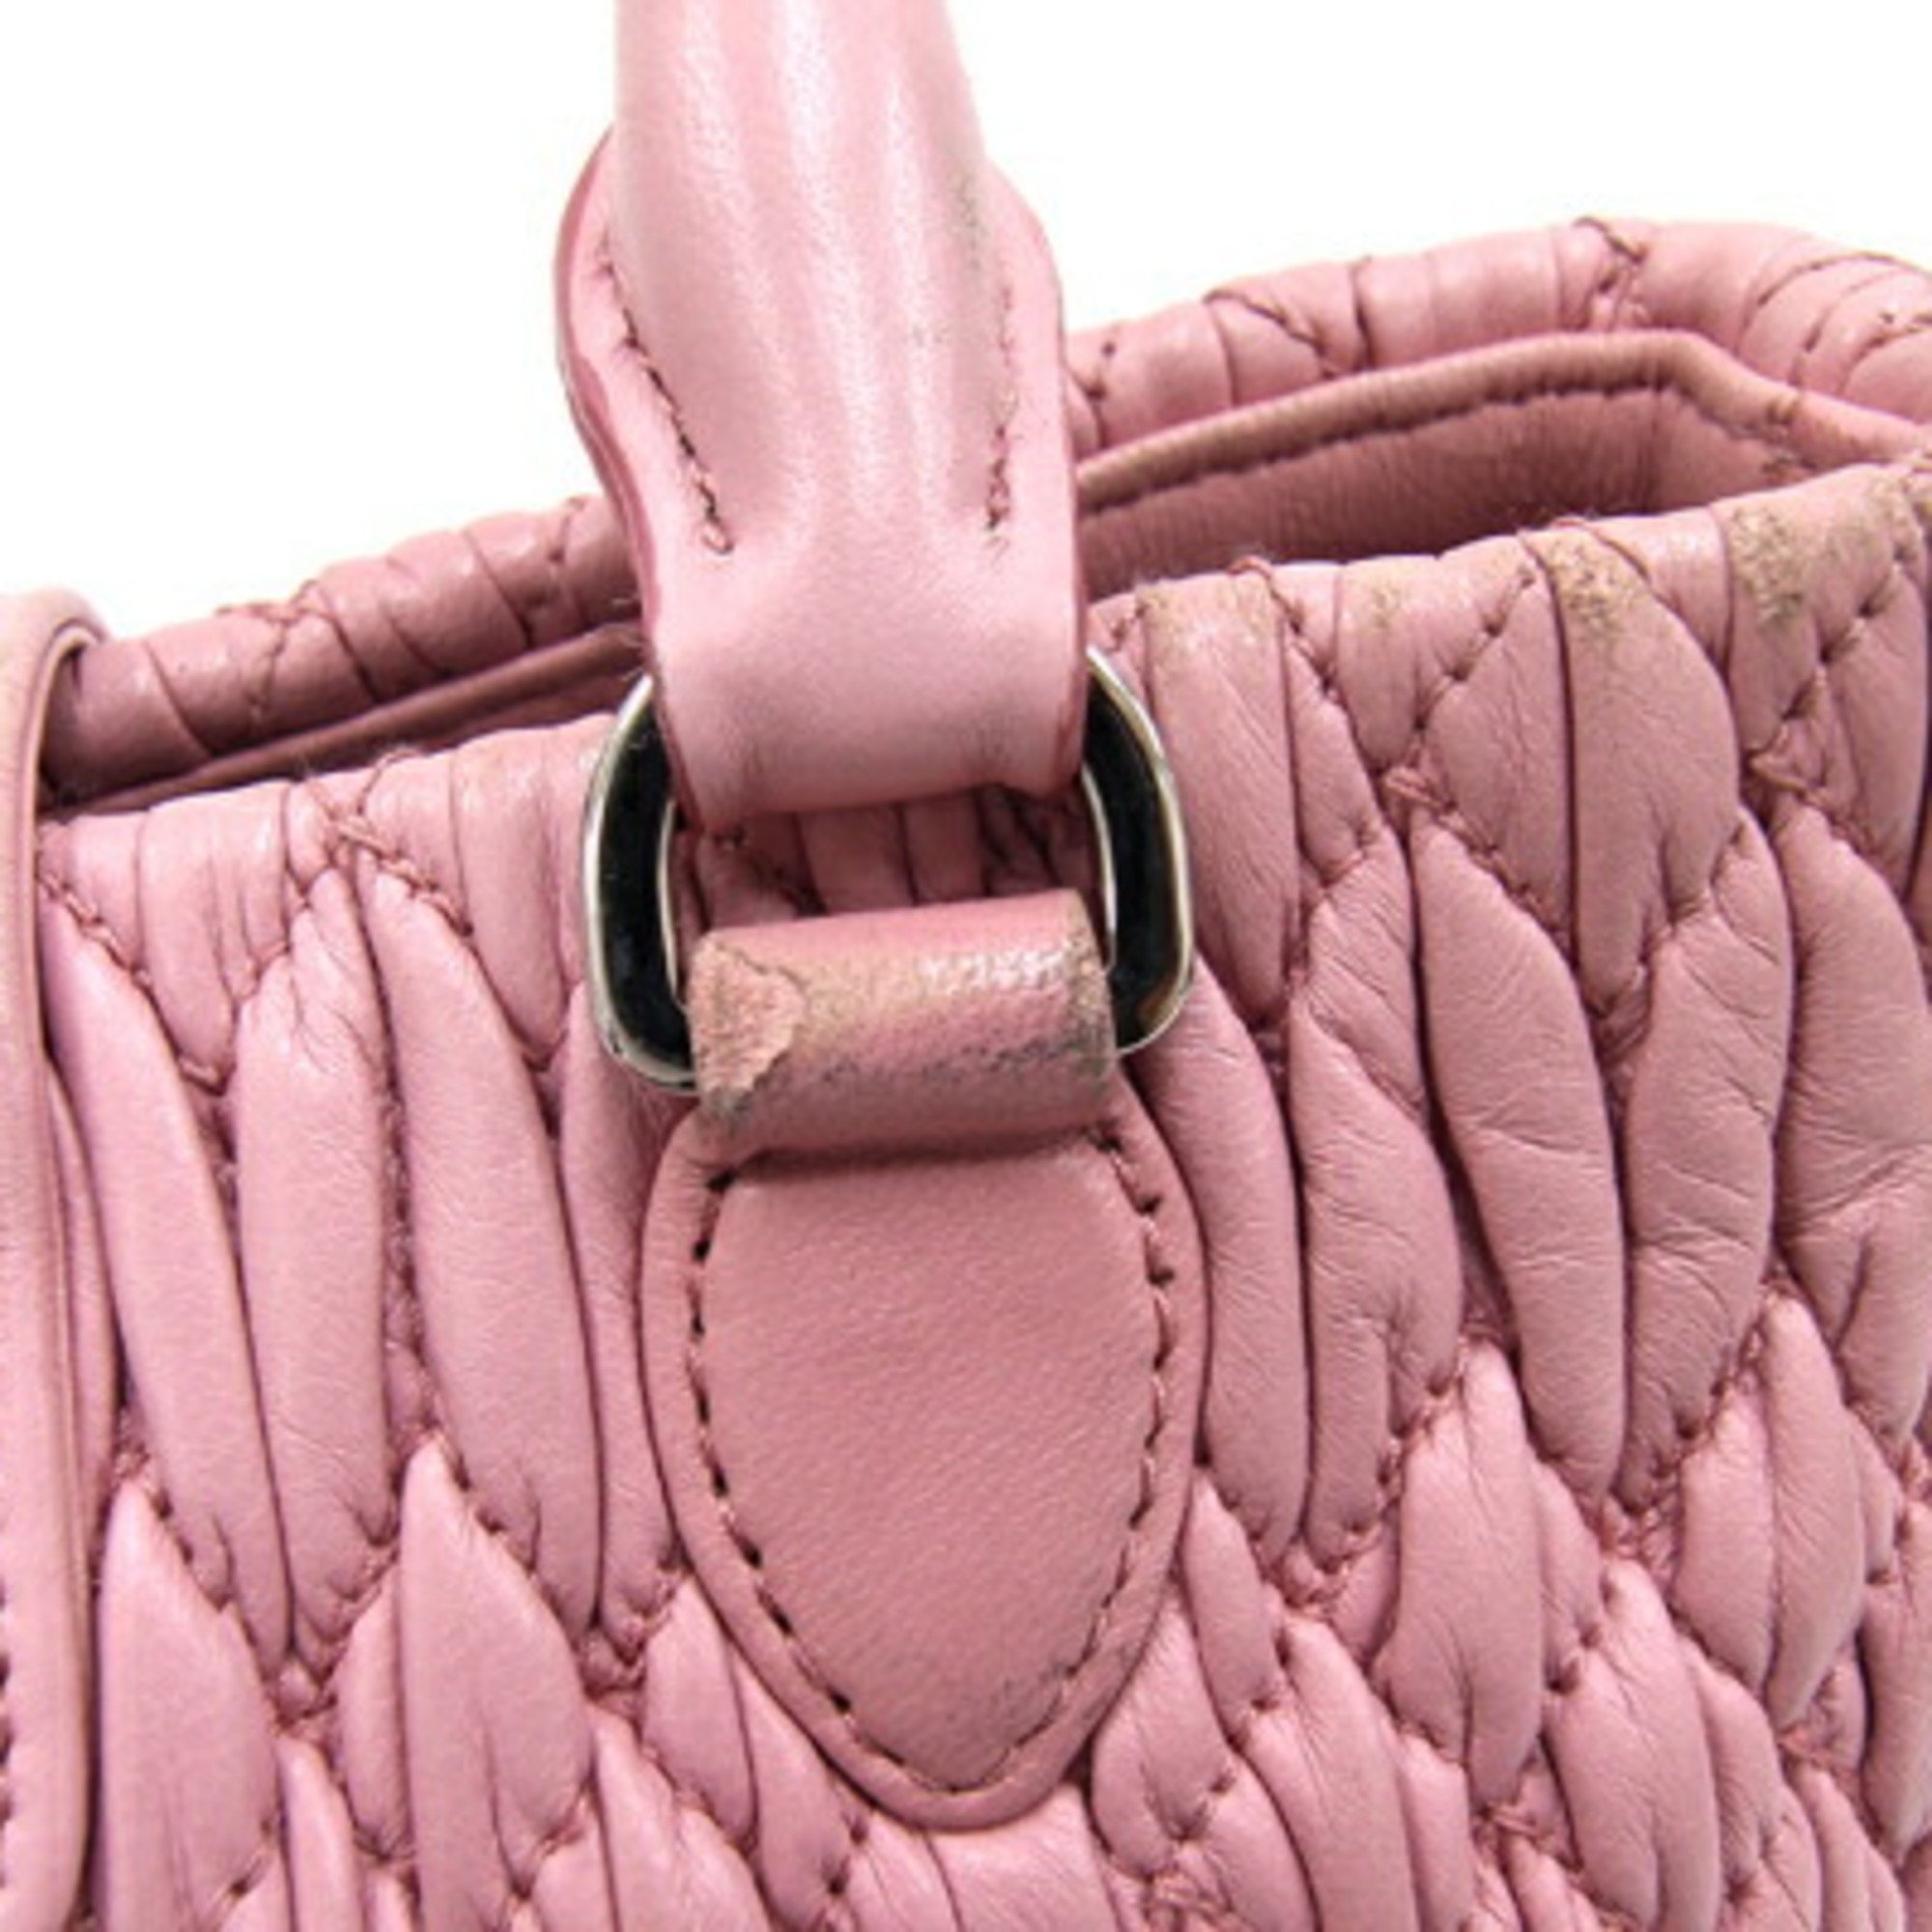 Miu Miu Miu Handbag Matelasse Nappa Crystal 5BE001 Pink Leather Shoulder Bag Gathered Beads Women's MIUMIU